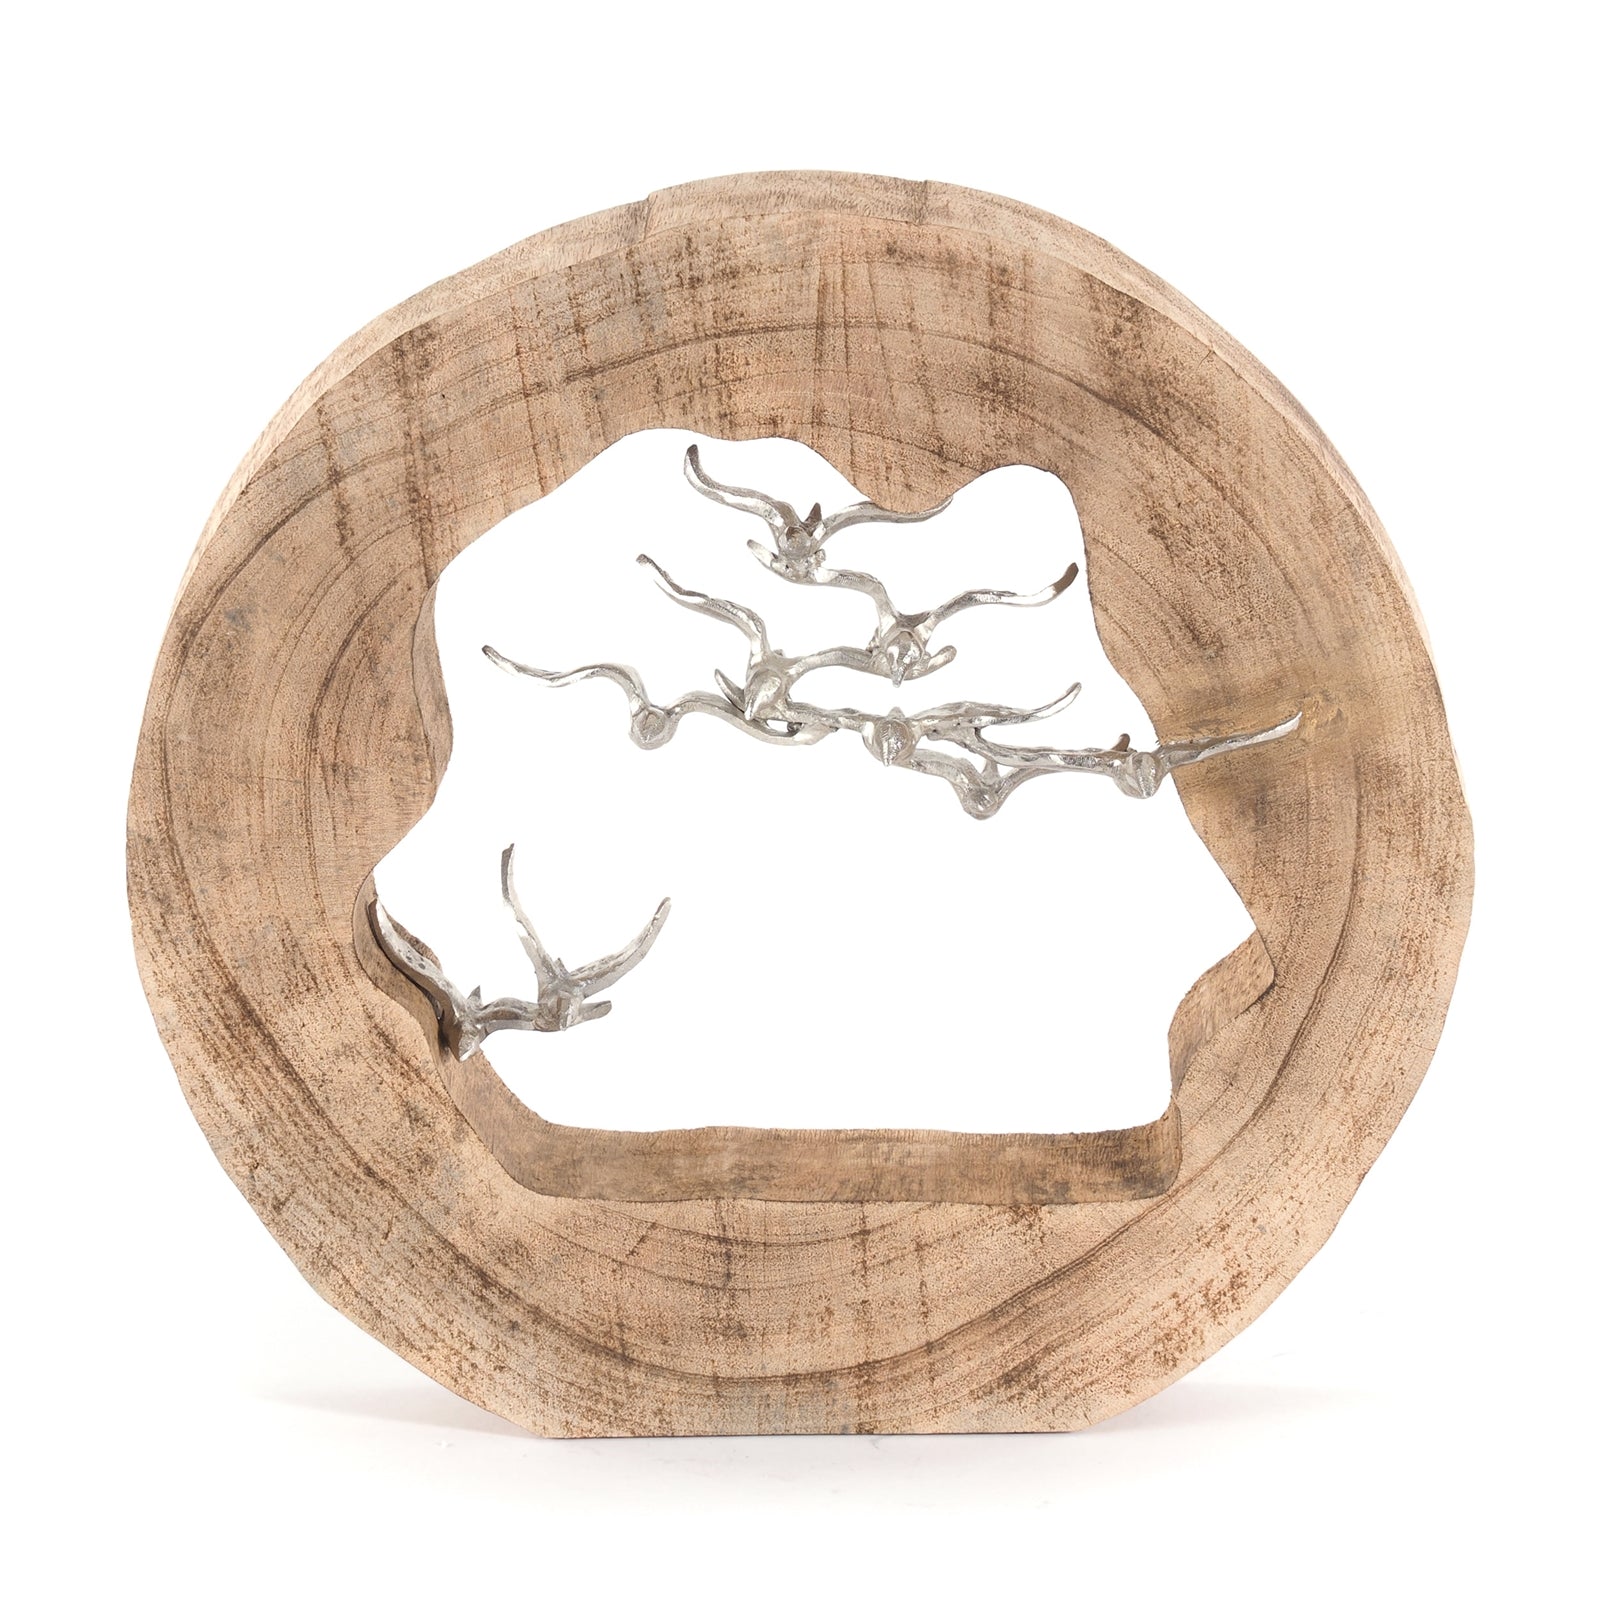 DESIGN SKULPTUR "BIRDS" |  36 cm, Holz mit Aluminium | Dekfofigur